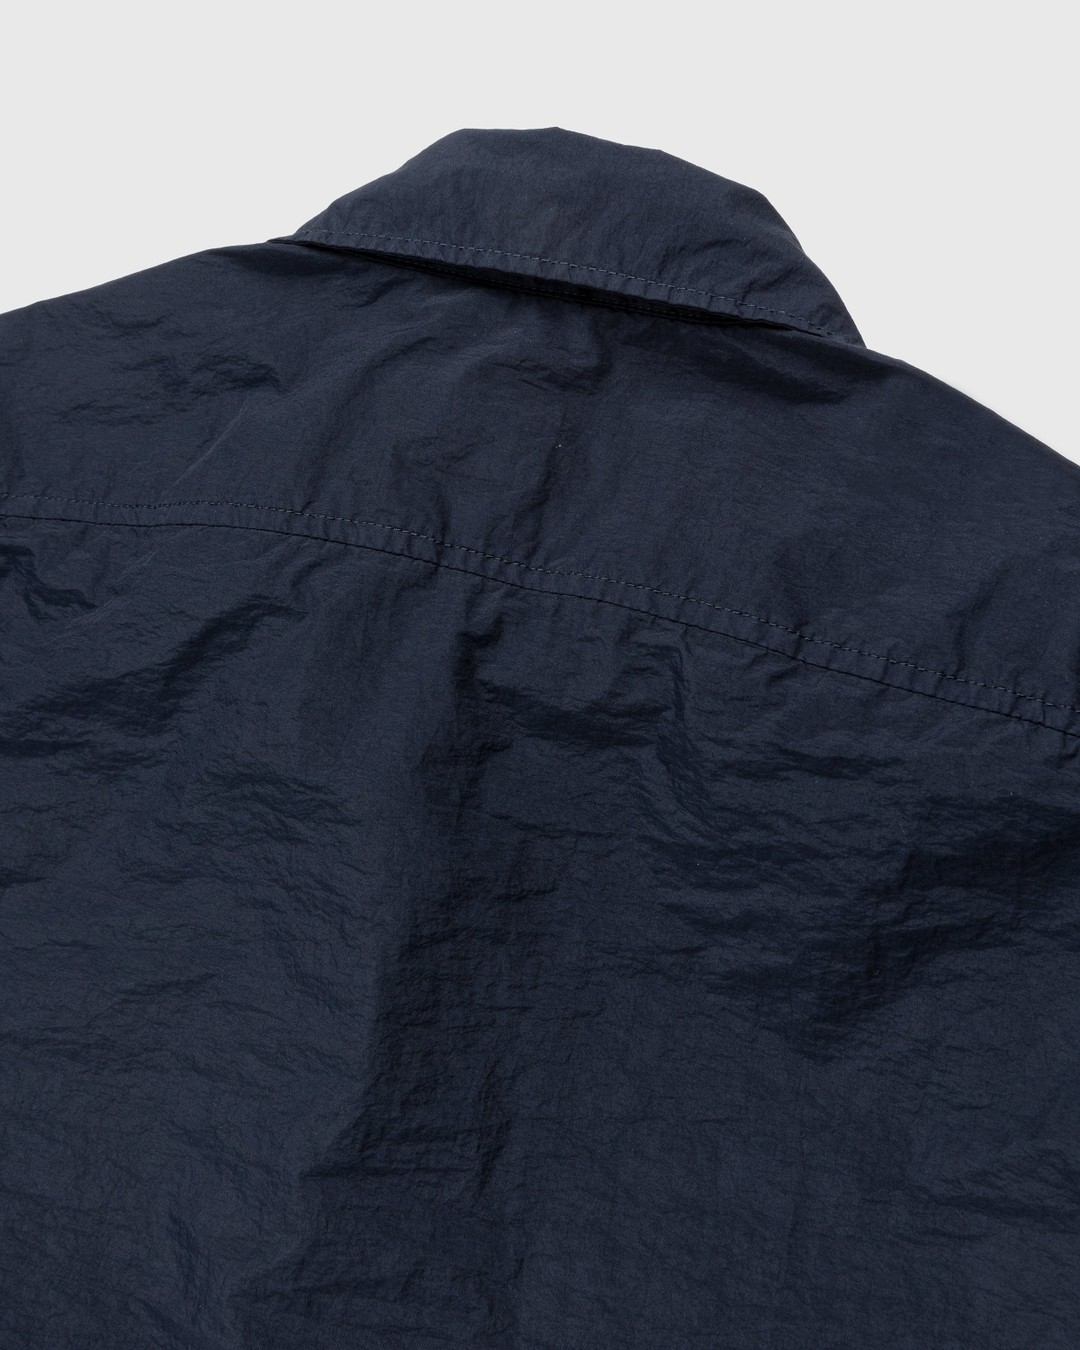 C.P. Company – Taylon L Zip Shirt Black - Overshirt - Black - Image 4